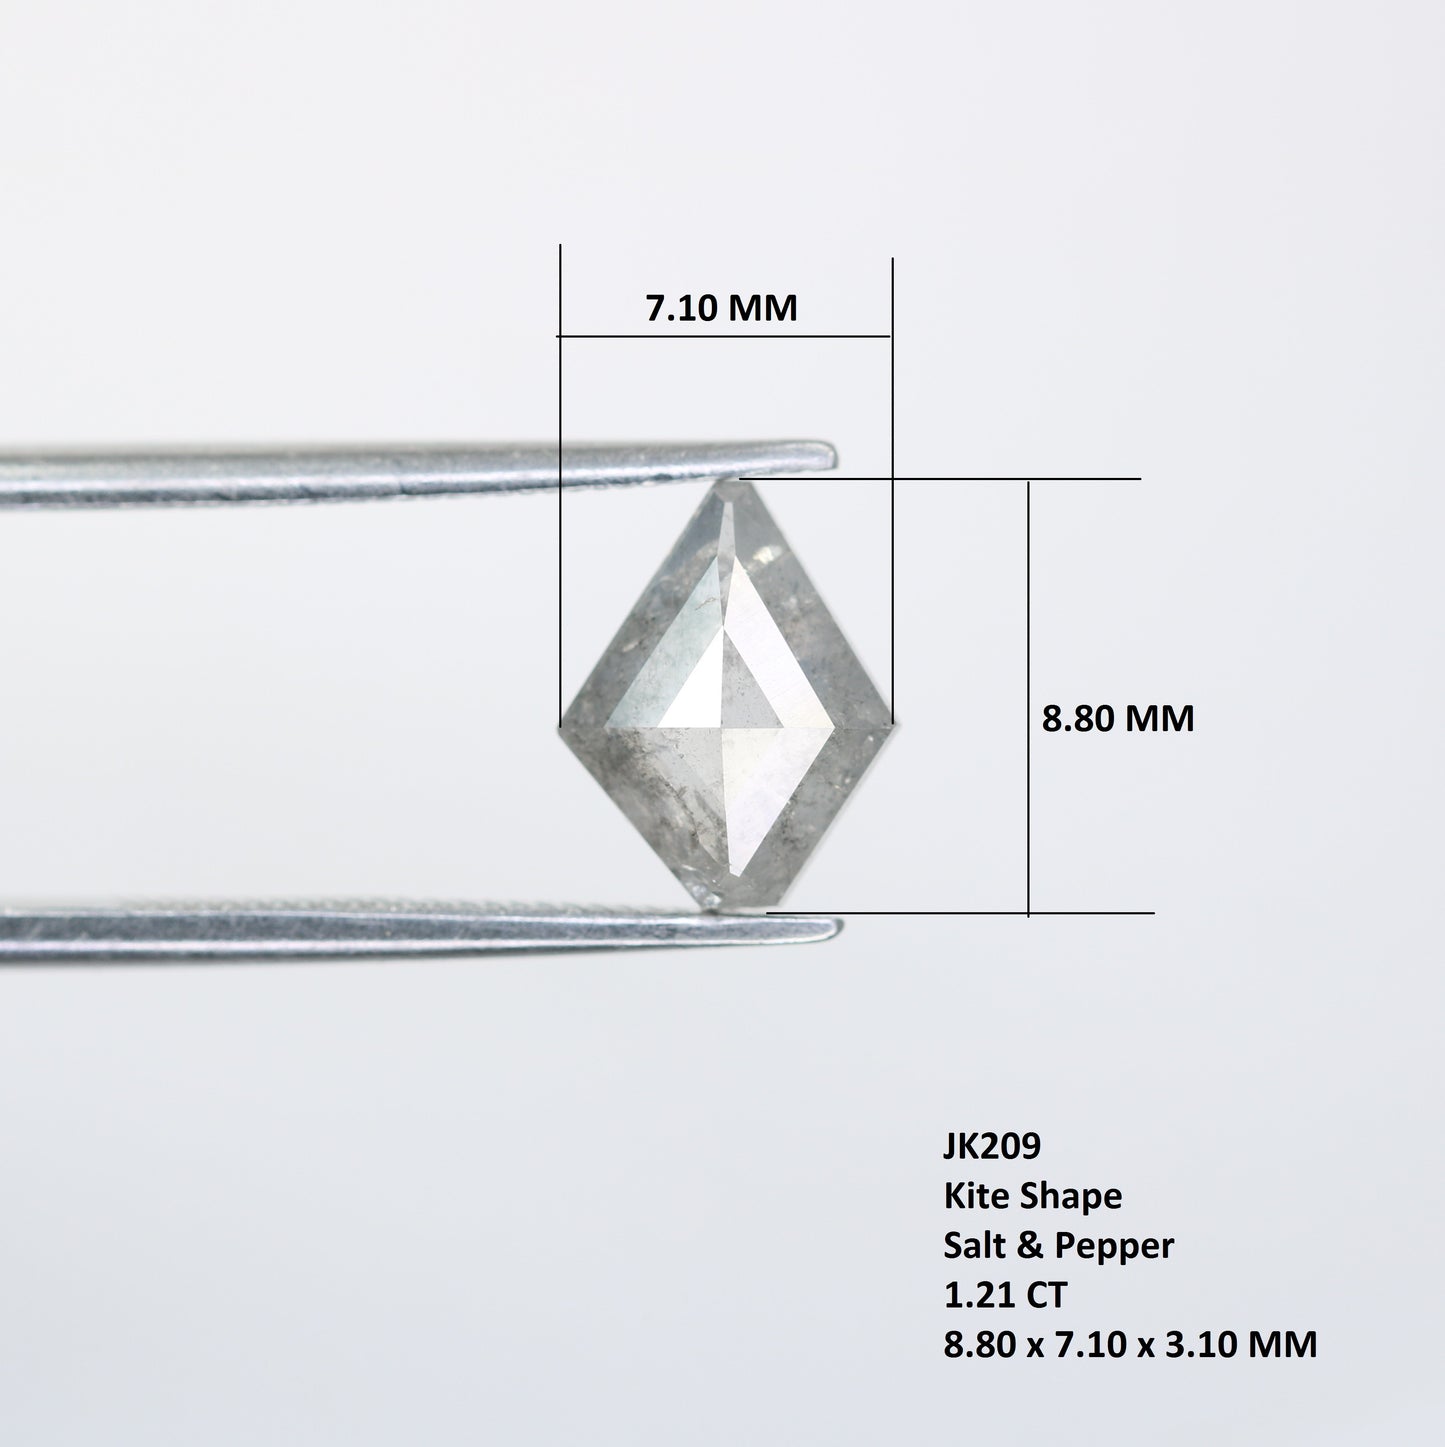 Kite Shaped Diamond 1.21 Carat Salt And Pepper Diamond For Engagement Ring